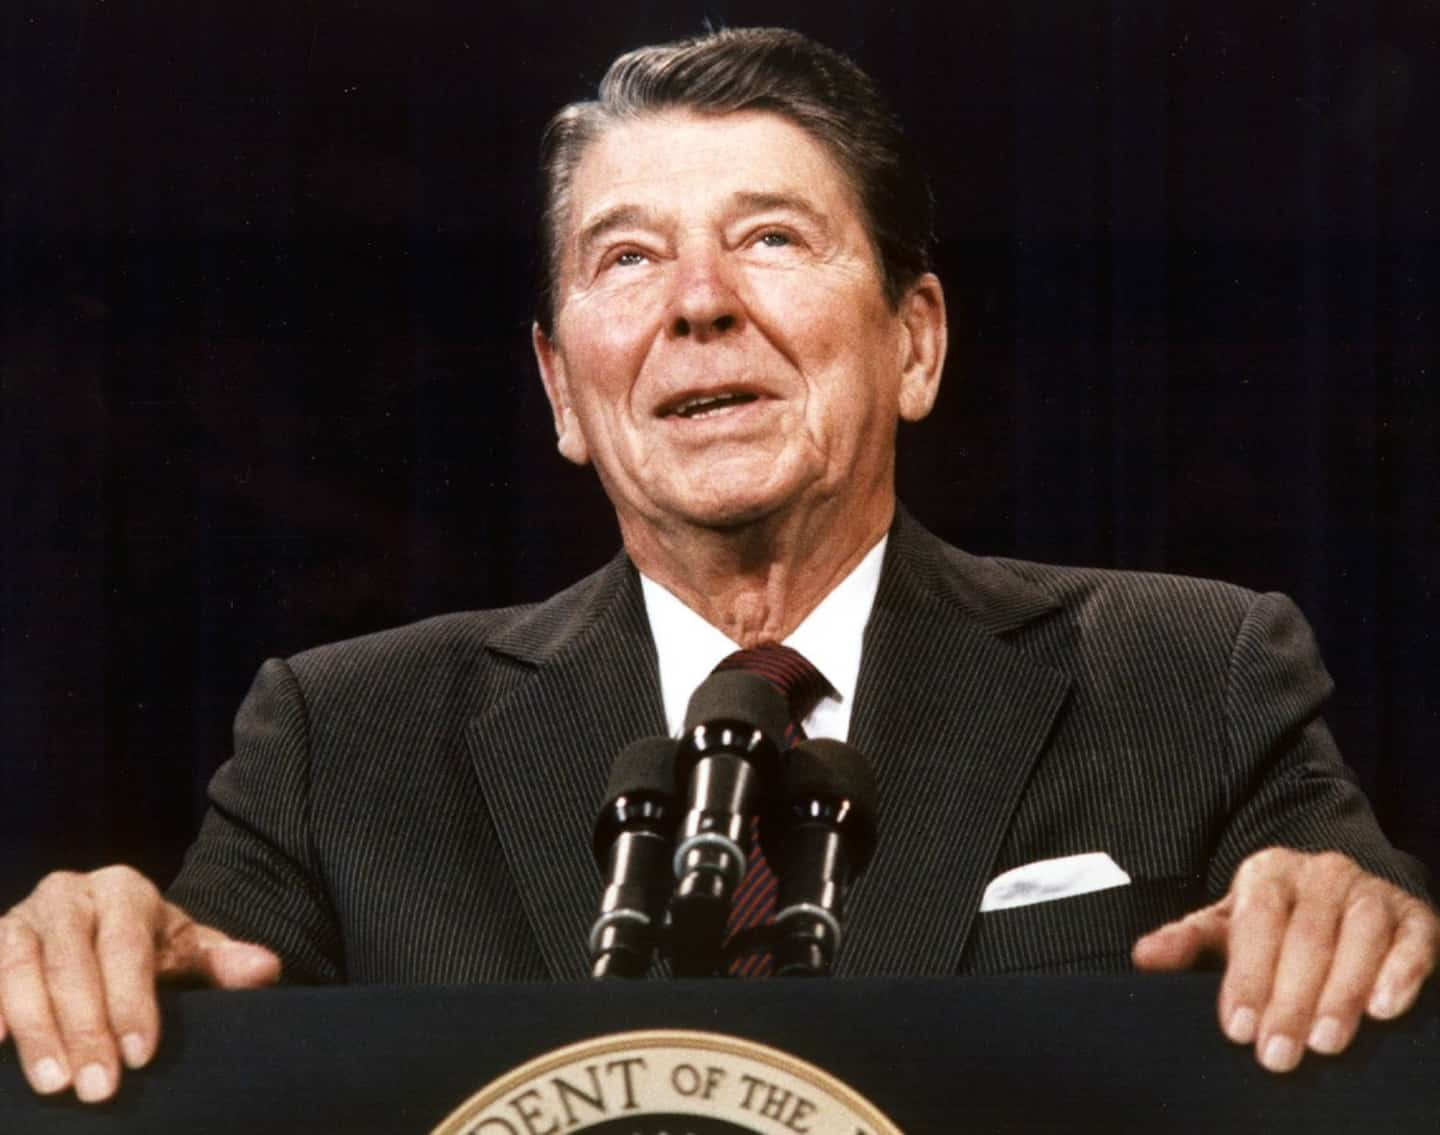 Reagan and the gay conspiracy